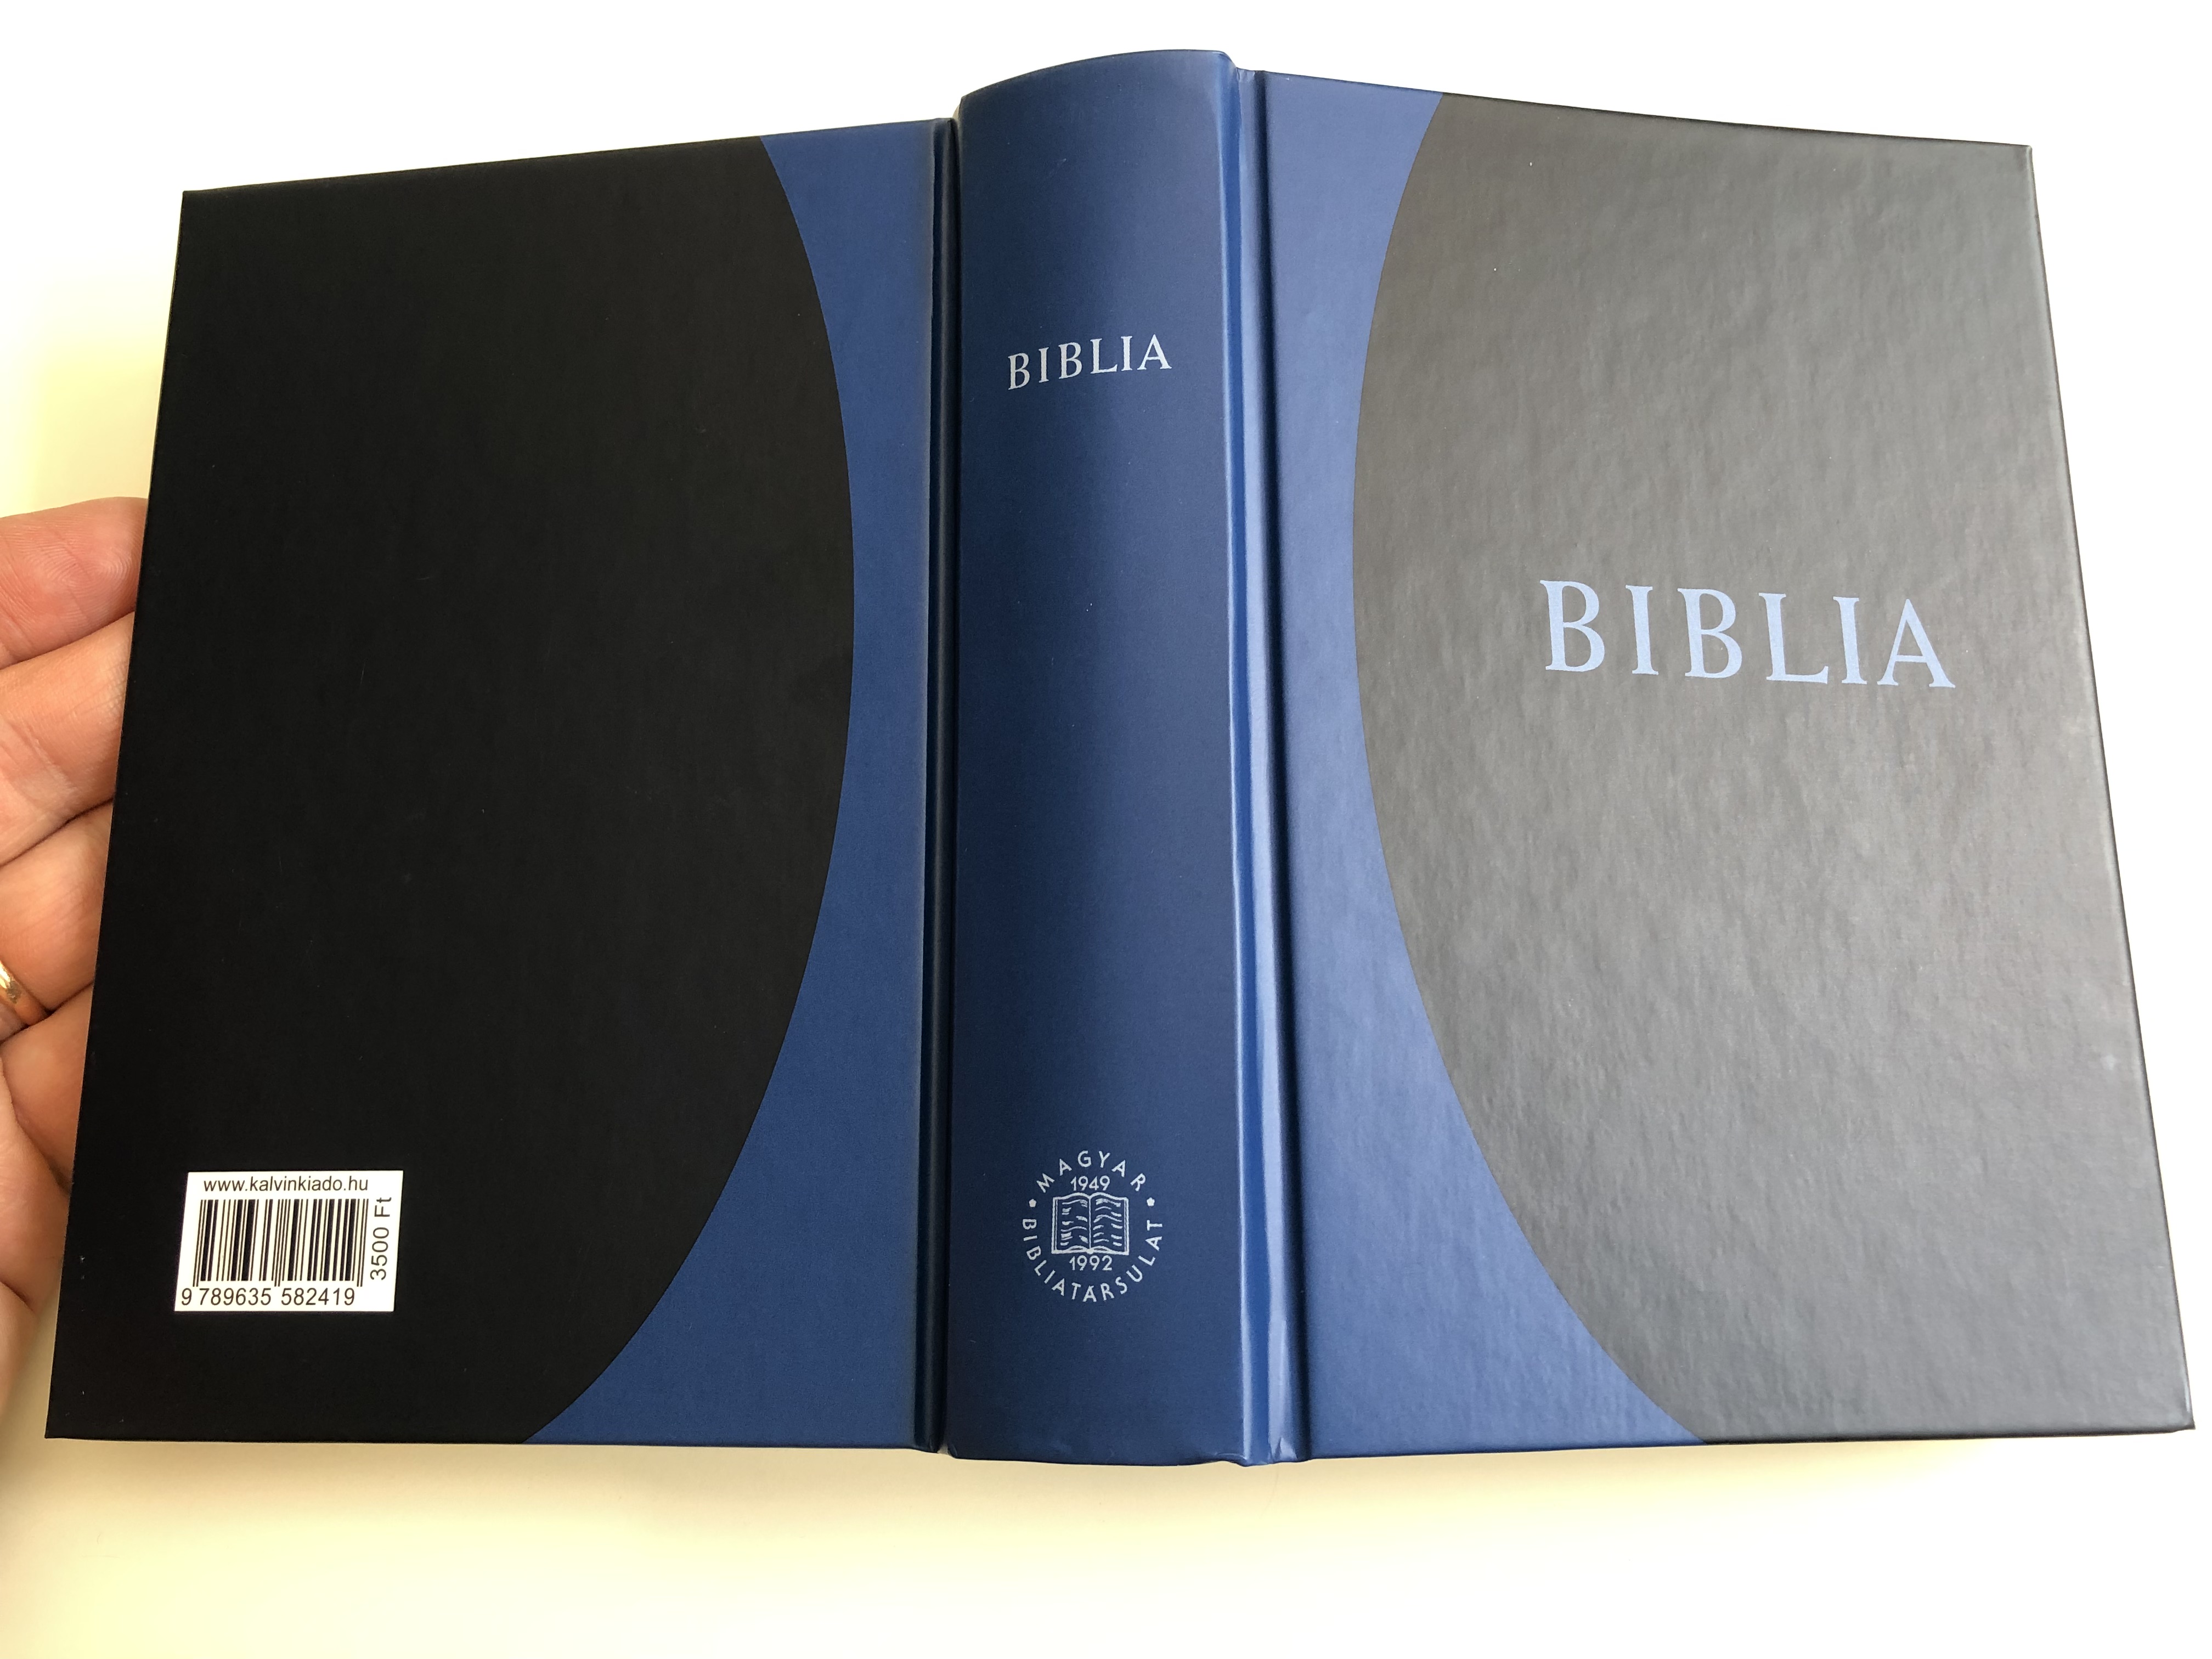 biblia-istennek-az-sz-vets-gben-s-jsz-vets-gben-adott-kijelent-se-r-f-2014-hungarian-language-bible-revised-translation-2028-hardcover-k-lvin-kiad-2018-blue-black-mid-size.jpg